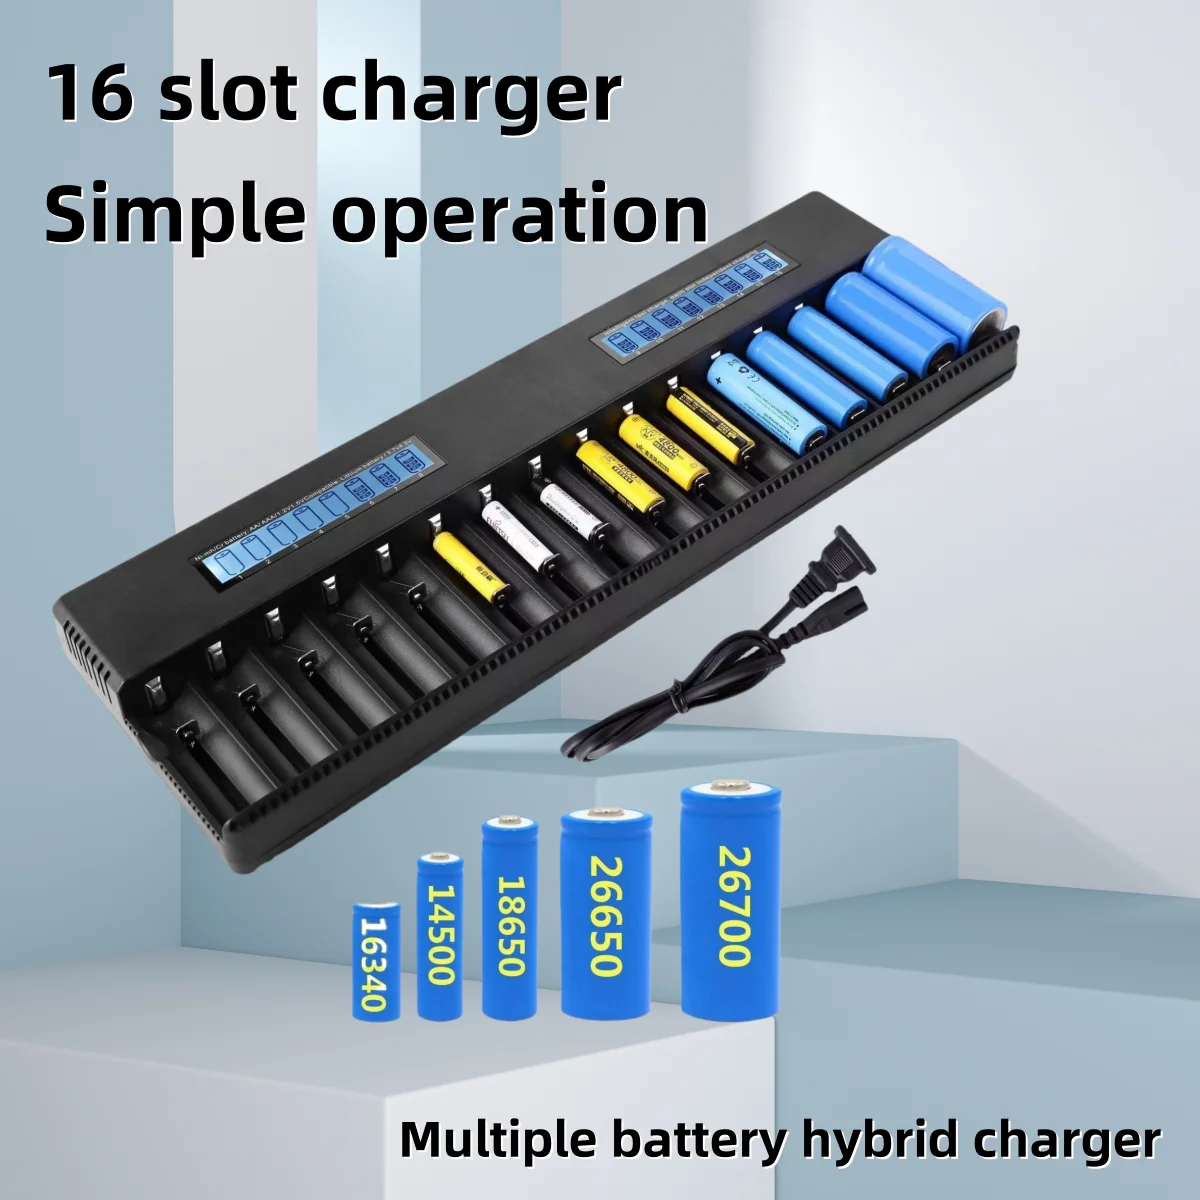 

L16 slot L12 slot Battery Charger for 18650 3.7V Li-ion NiMH 1.2V 16340 3.7V 26650 21700 26700 AA AAA 14500 LDC